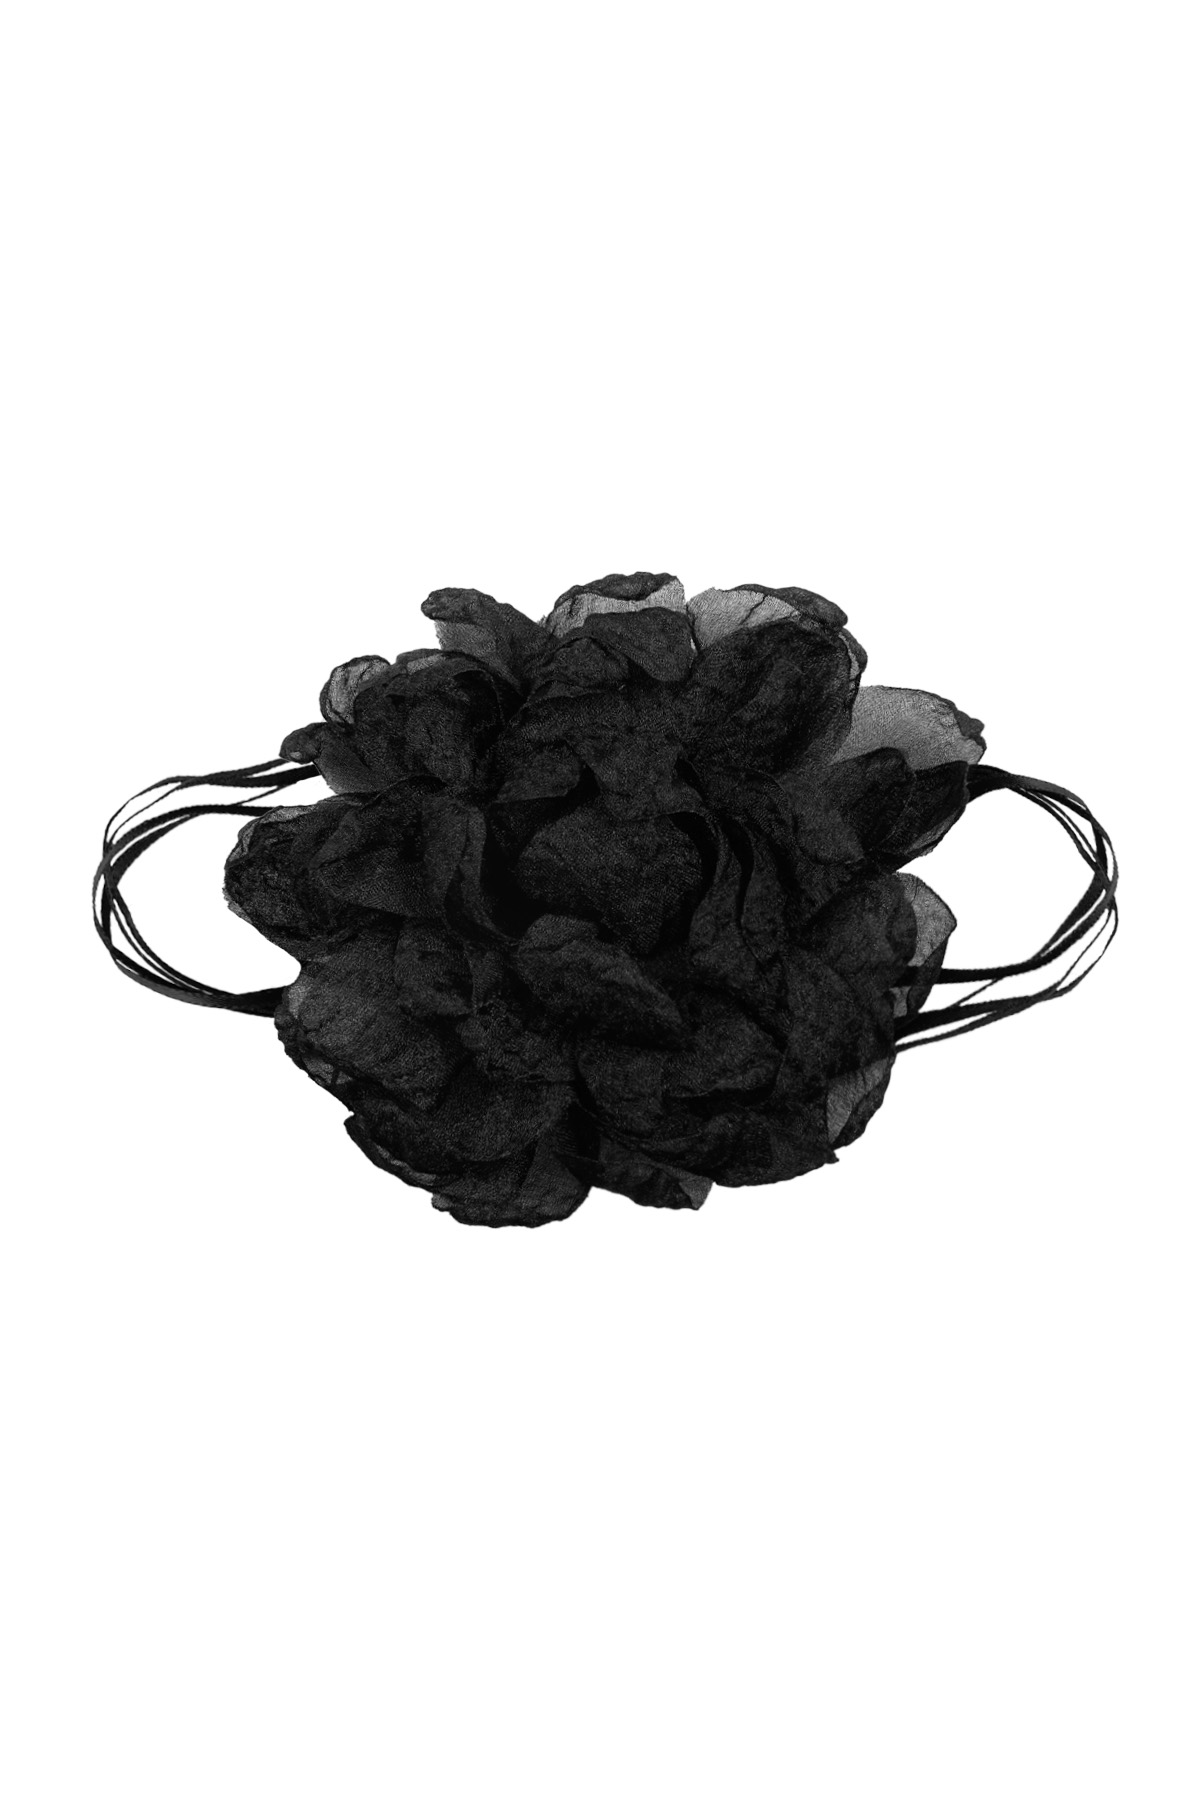 Ketting lint met bloem - zwart 